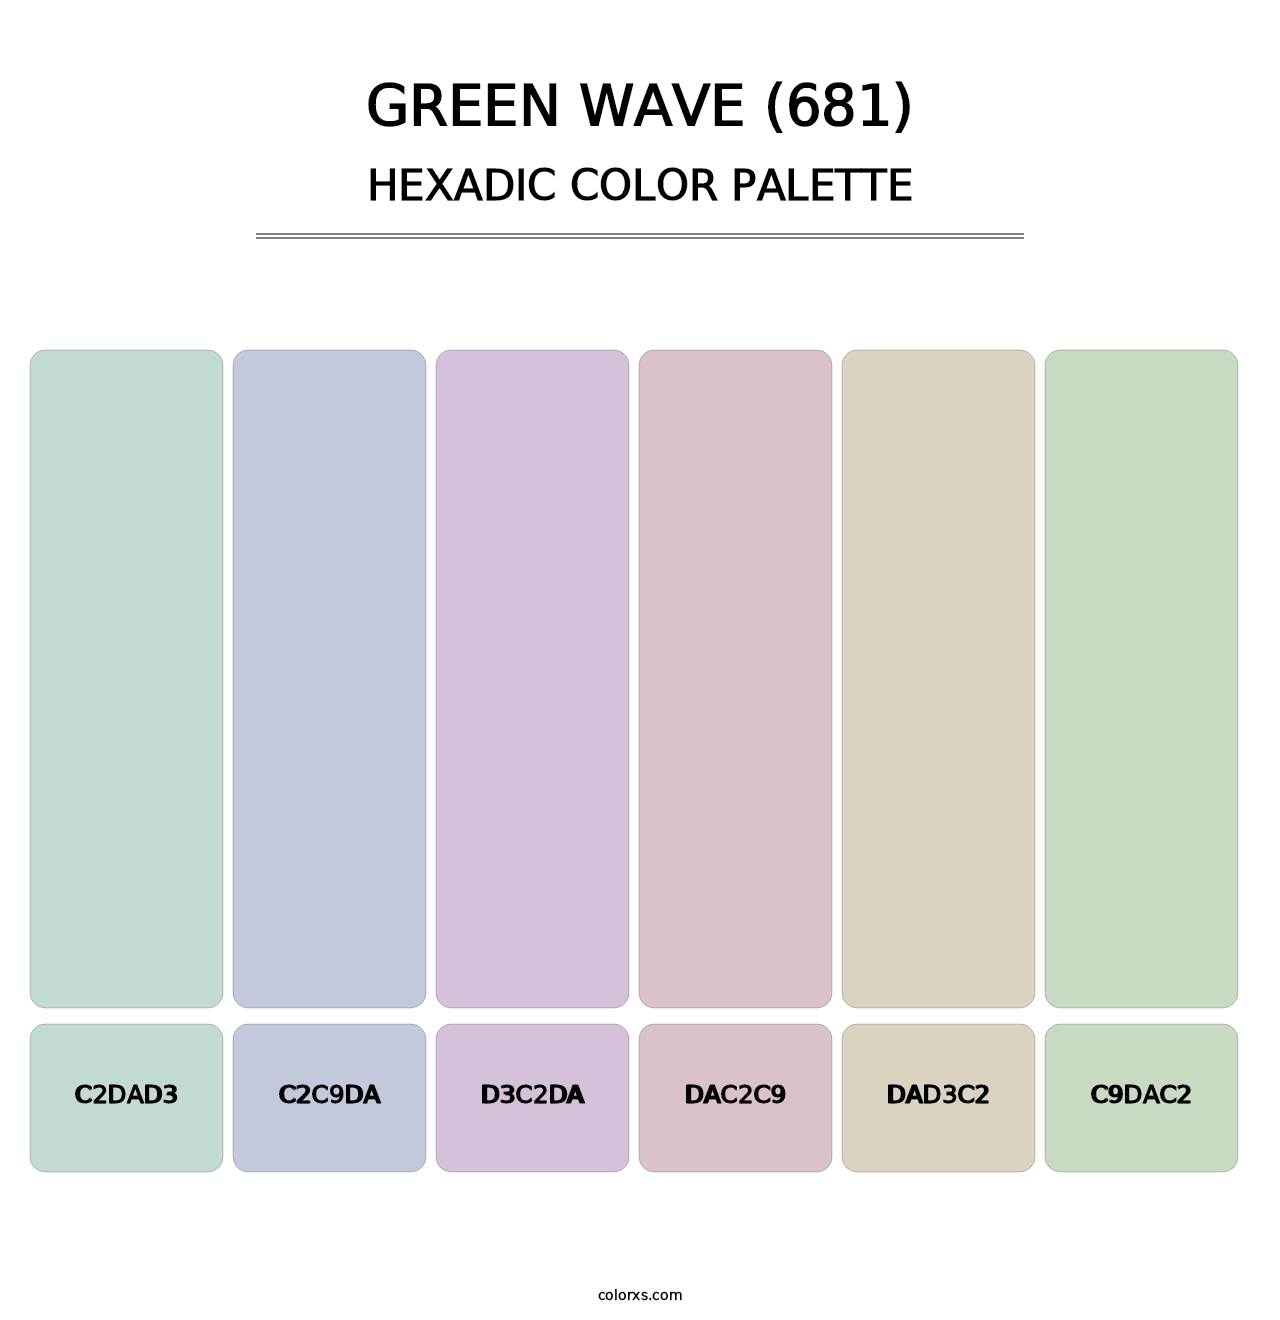 Green Wave (681) - Hexadic Color Palette